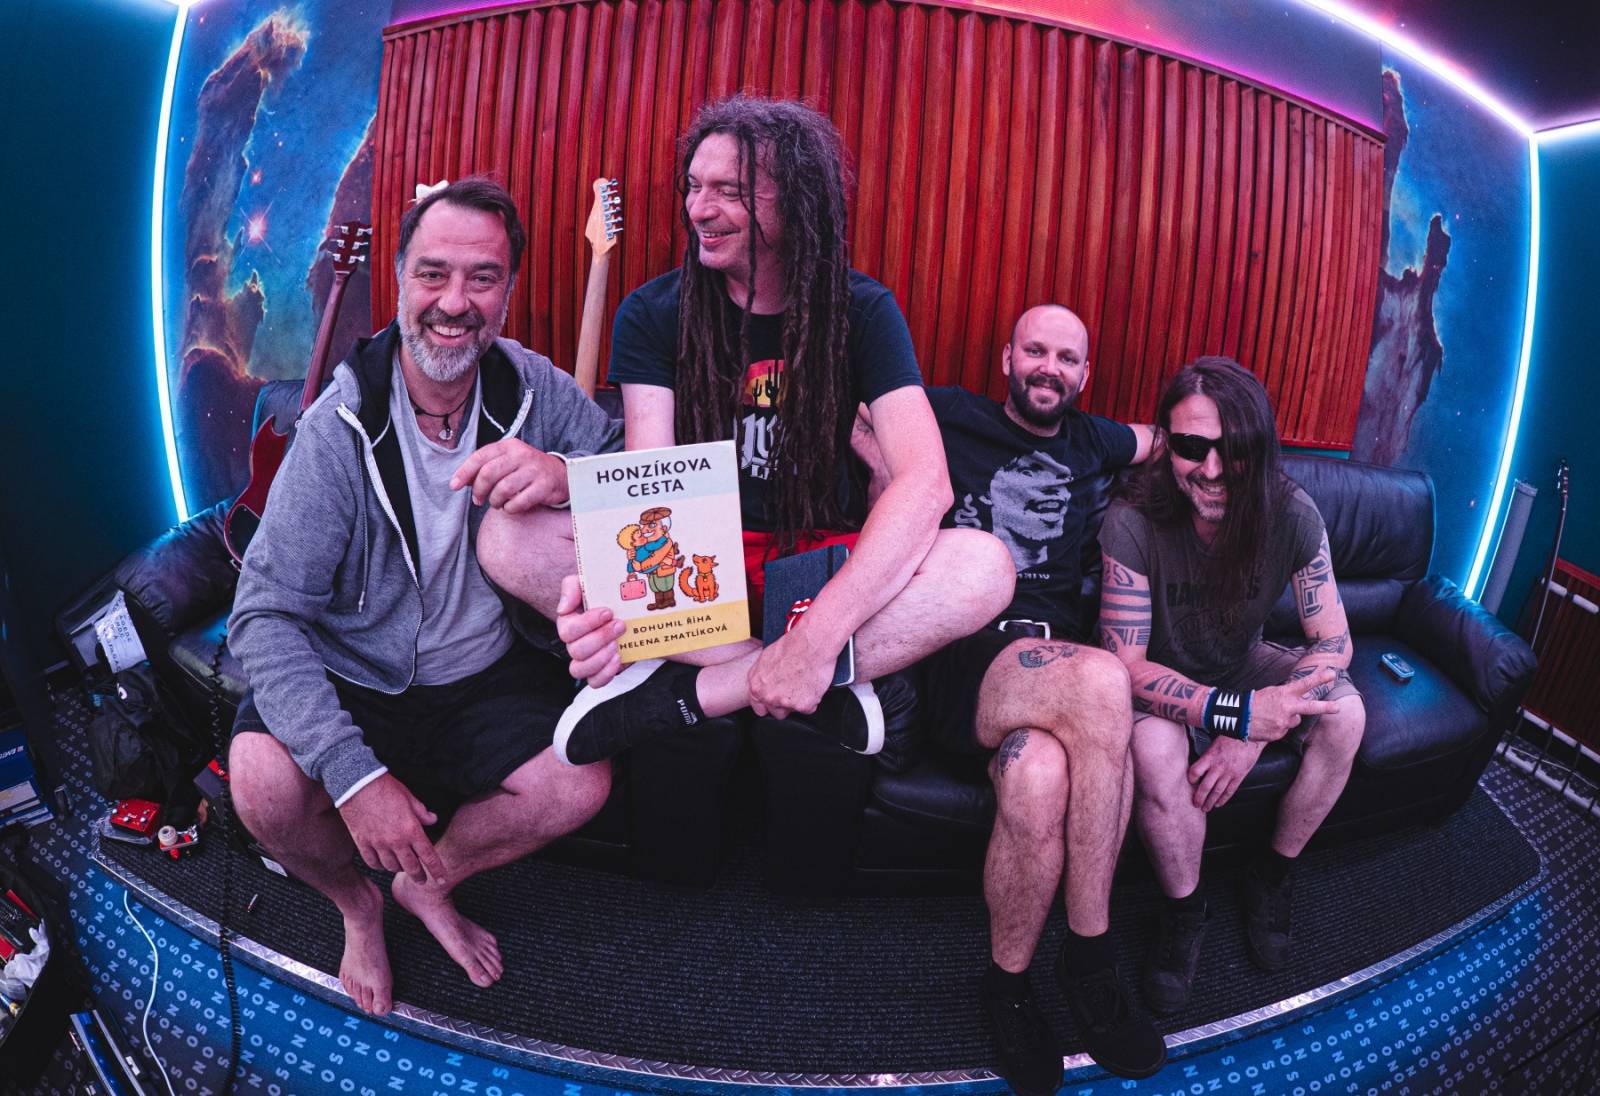 ANKETA | 40 let metalu (III.): Členové John Wolfhooker, Debustrolu, Imodia a Kurtizán z 25. Avenue vyrostli na  Korn, Linkin Park i Black Sabbath